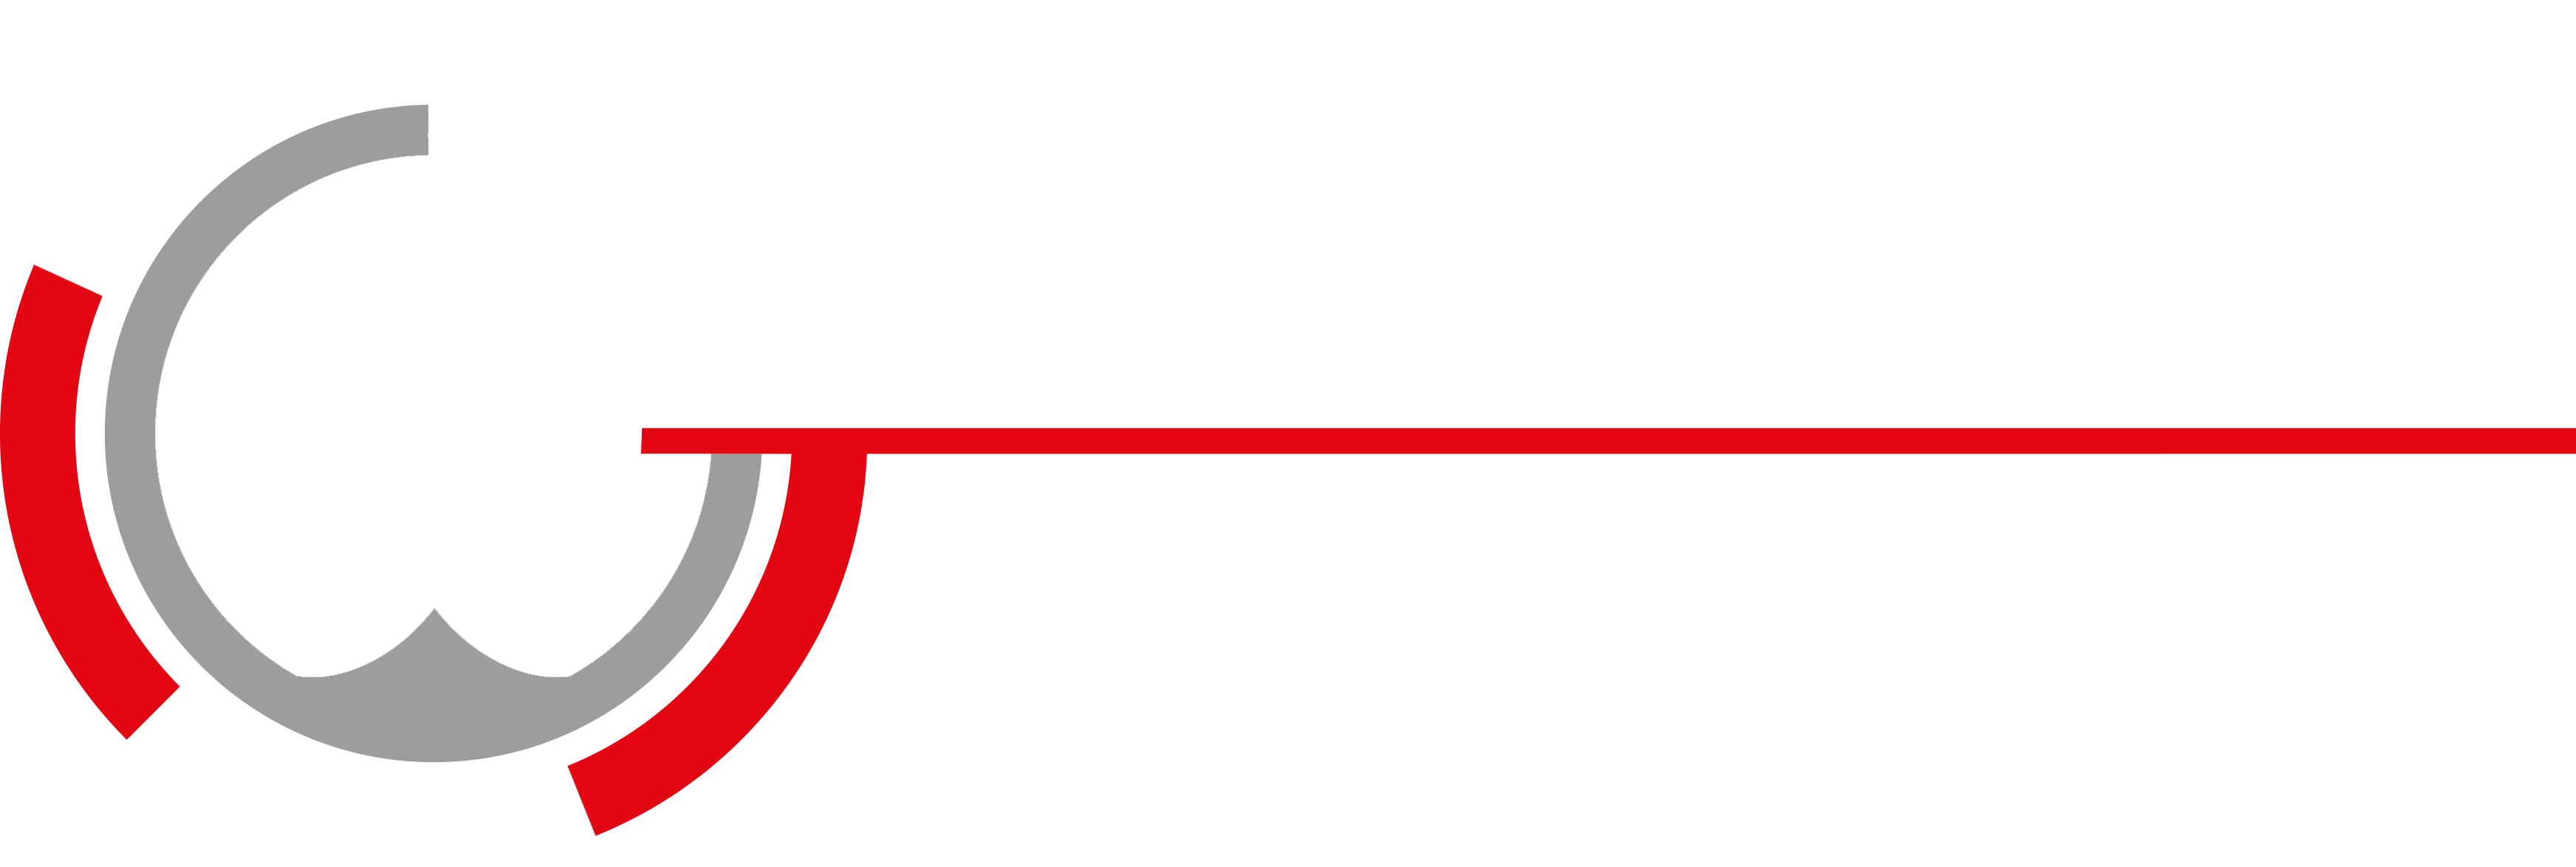 Composite World